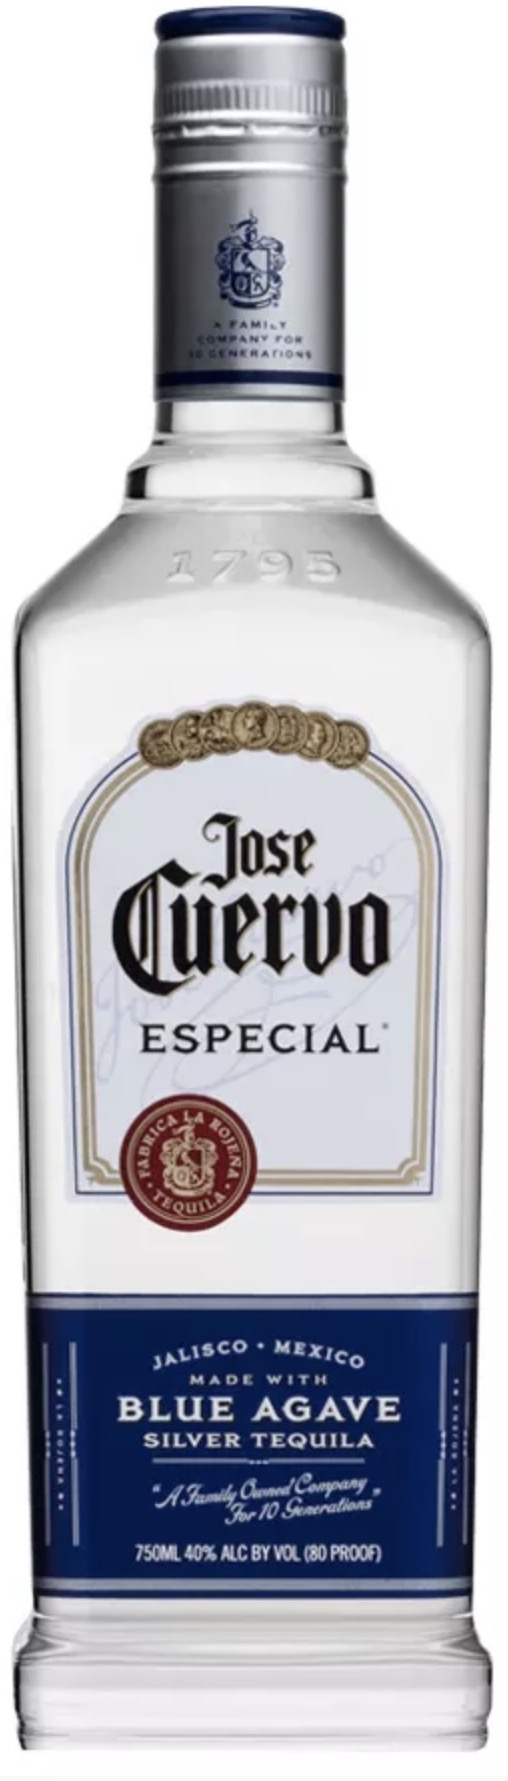 José Cuervo Especial Silver Tequila 38% vol. 0,7L